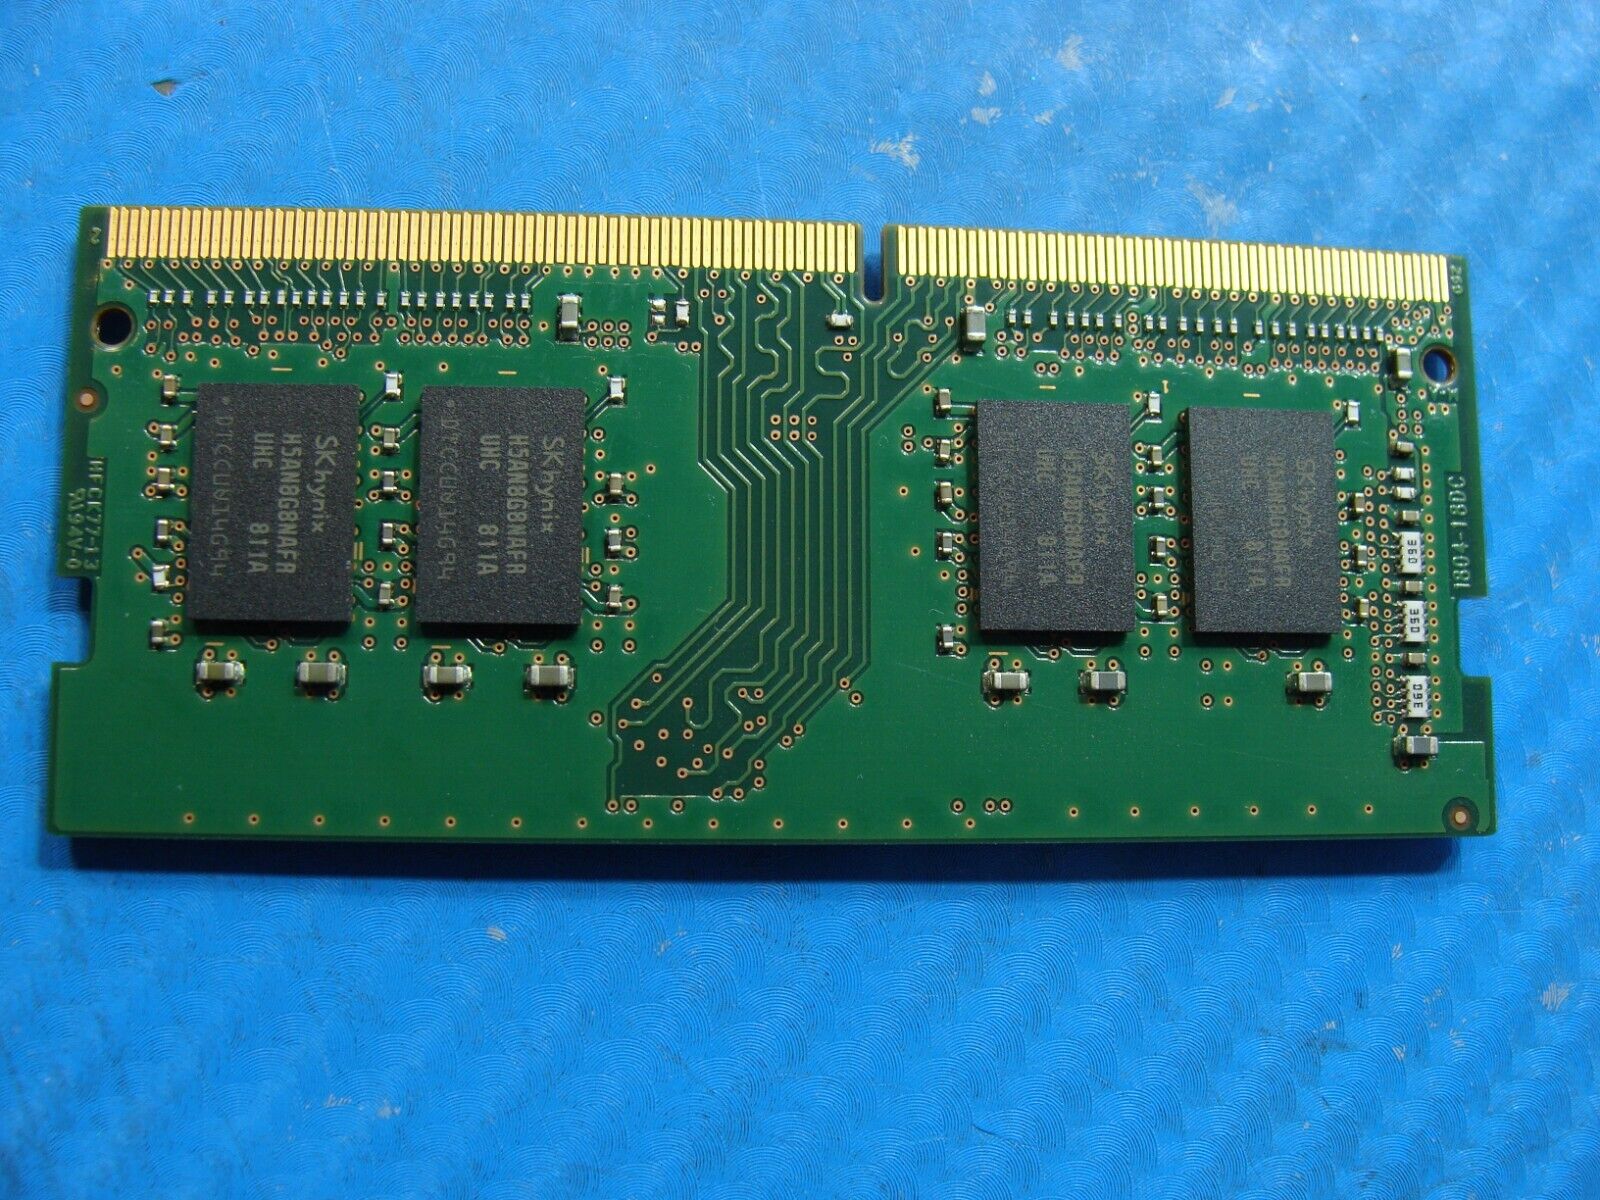 HP 17-ak000 SK Hynix 8GB 1Rx8 PC4-2400T Memory RAM SO-DIMM 862398-855